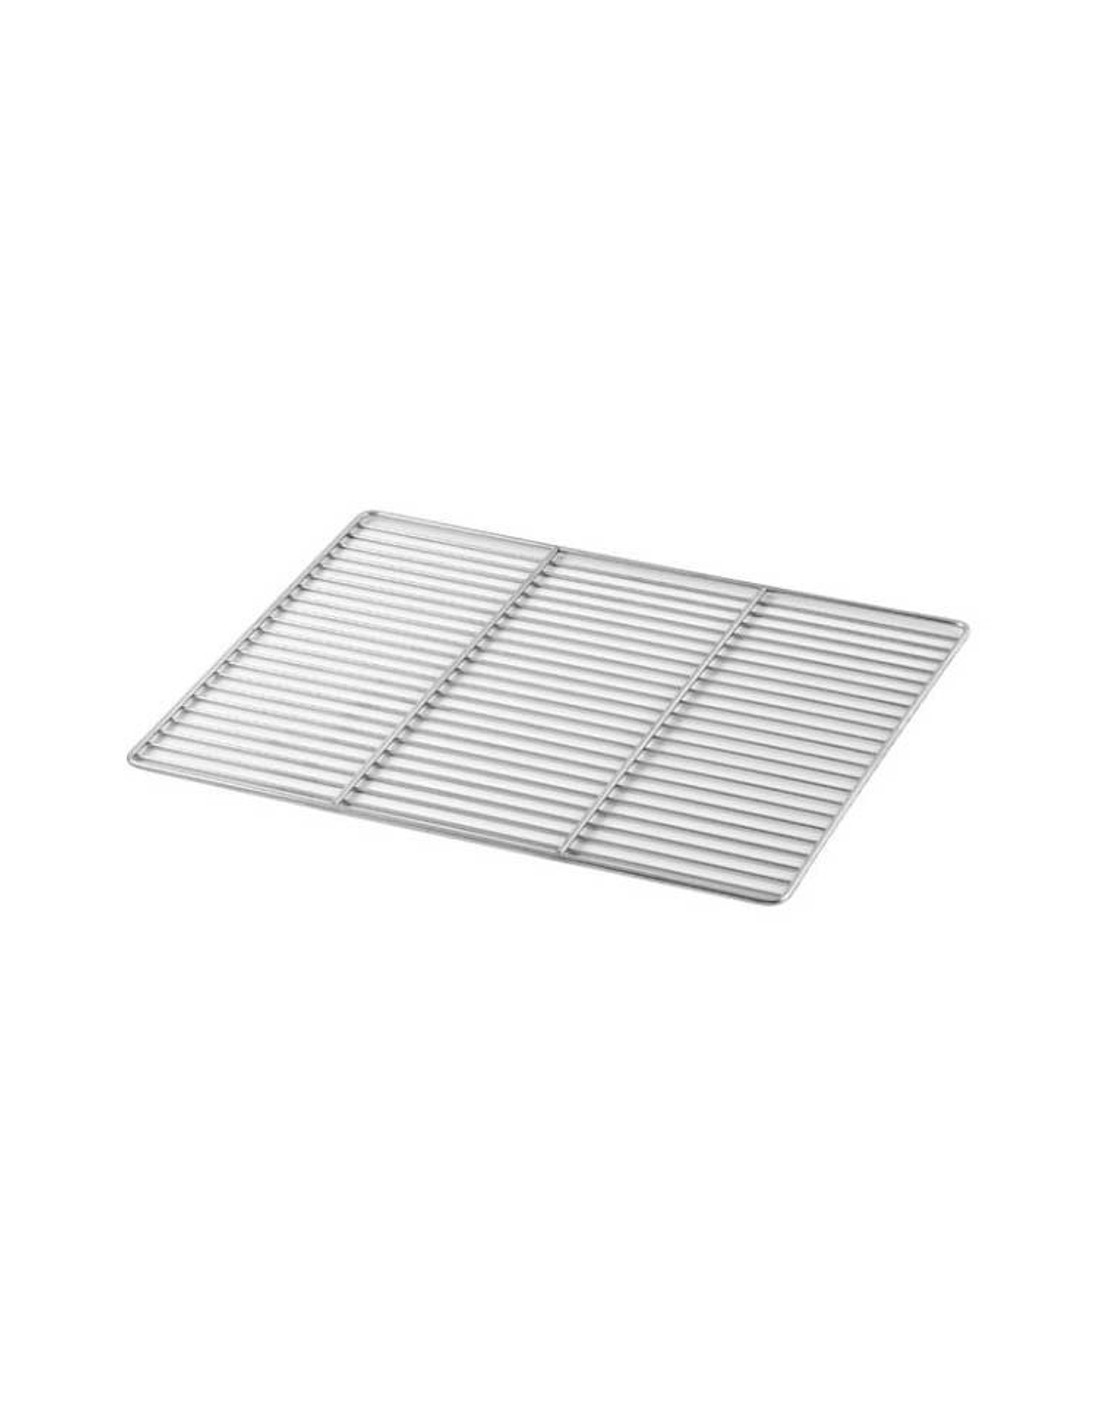 Plasticized grid - Cm 50.5 x 22.5